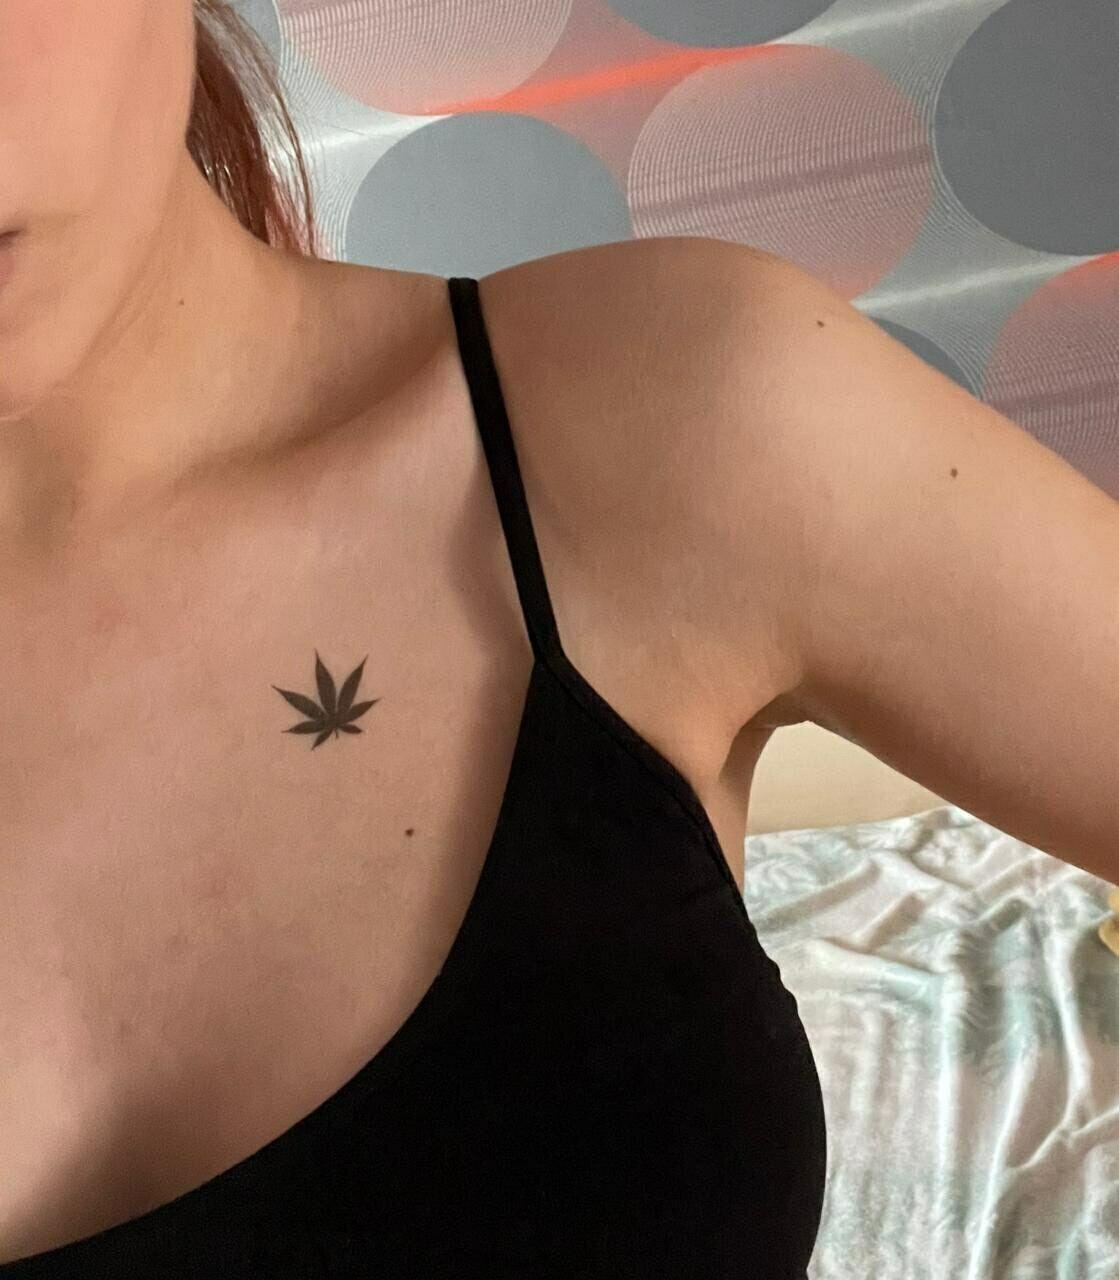 Weed tattoos: Yay or nay? - The Cannifornian